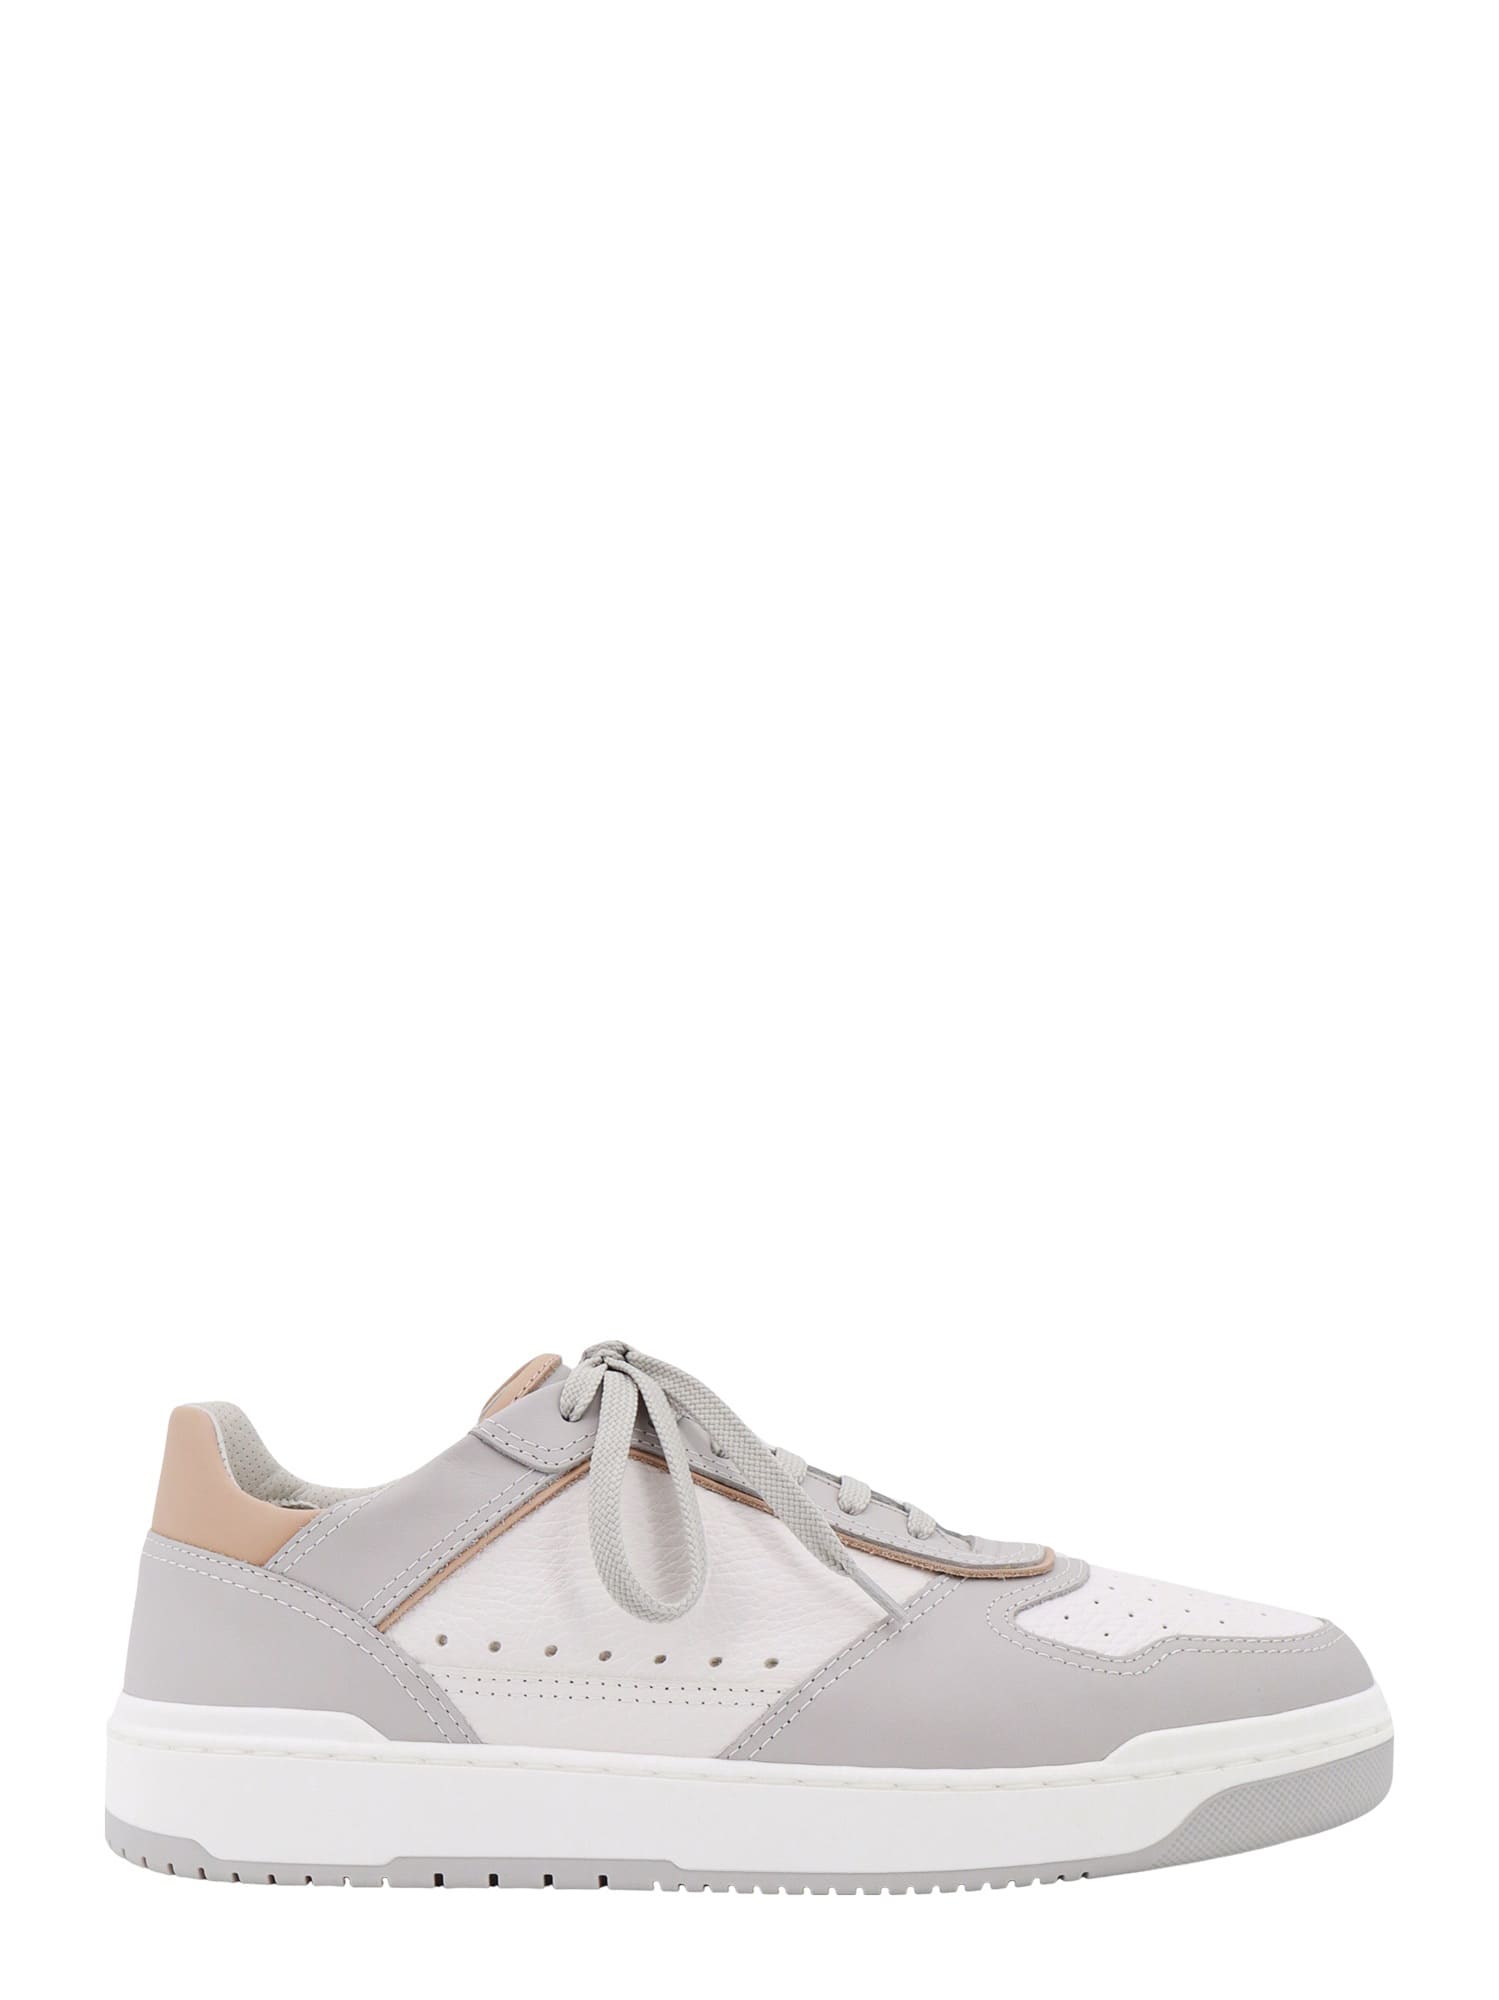 Shop Brunello Cucinelli Sneakers In White/grey/beige